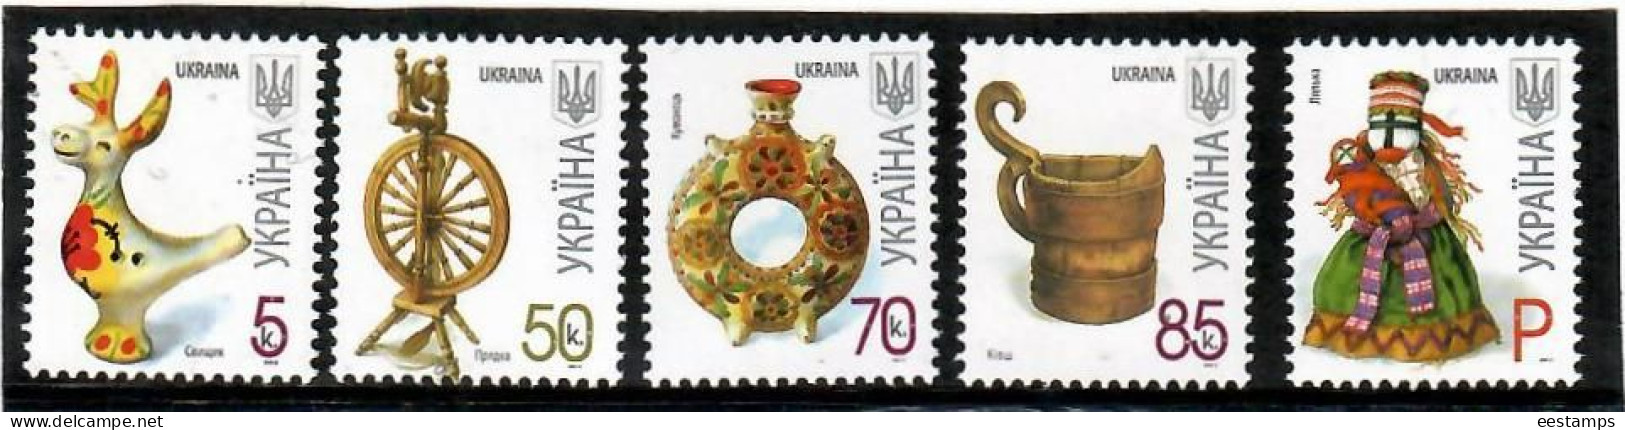 Ukraine 2007 . Definitives 2007. 5k, 50k, 70k, 85k , P  . Michel # 832-33, 835-36, 839 II - Ukraine